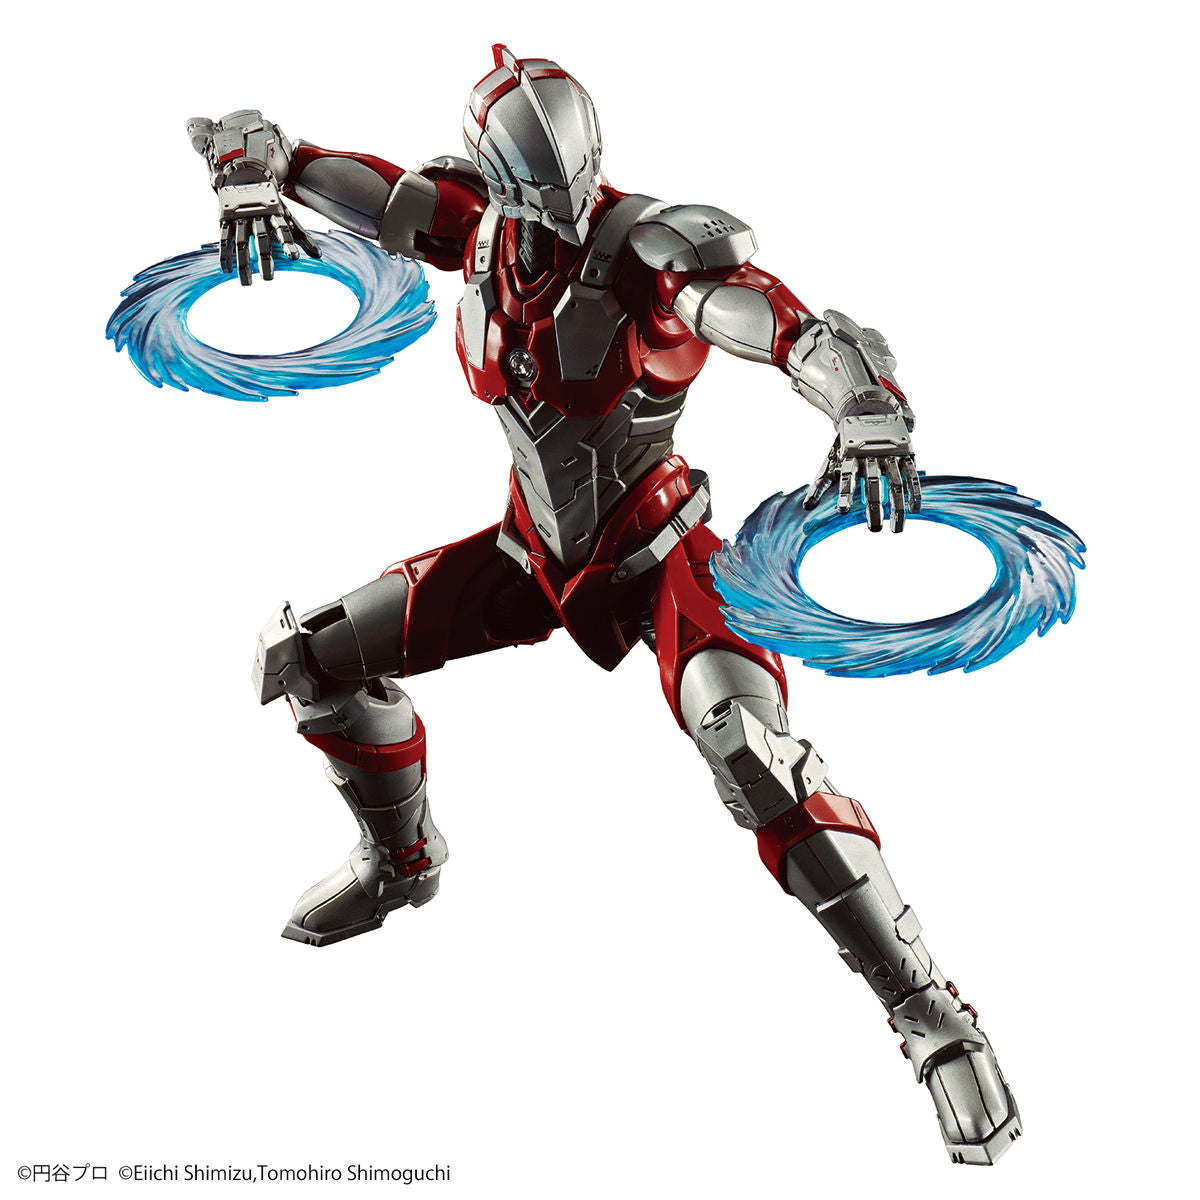 Figure-rise Standard 1/12 Ultraman [B Type]